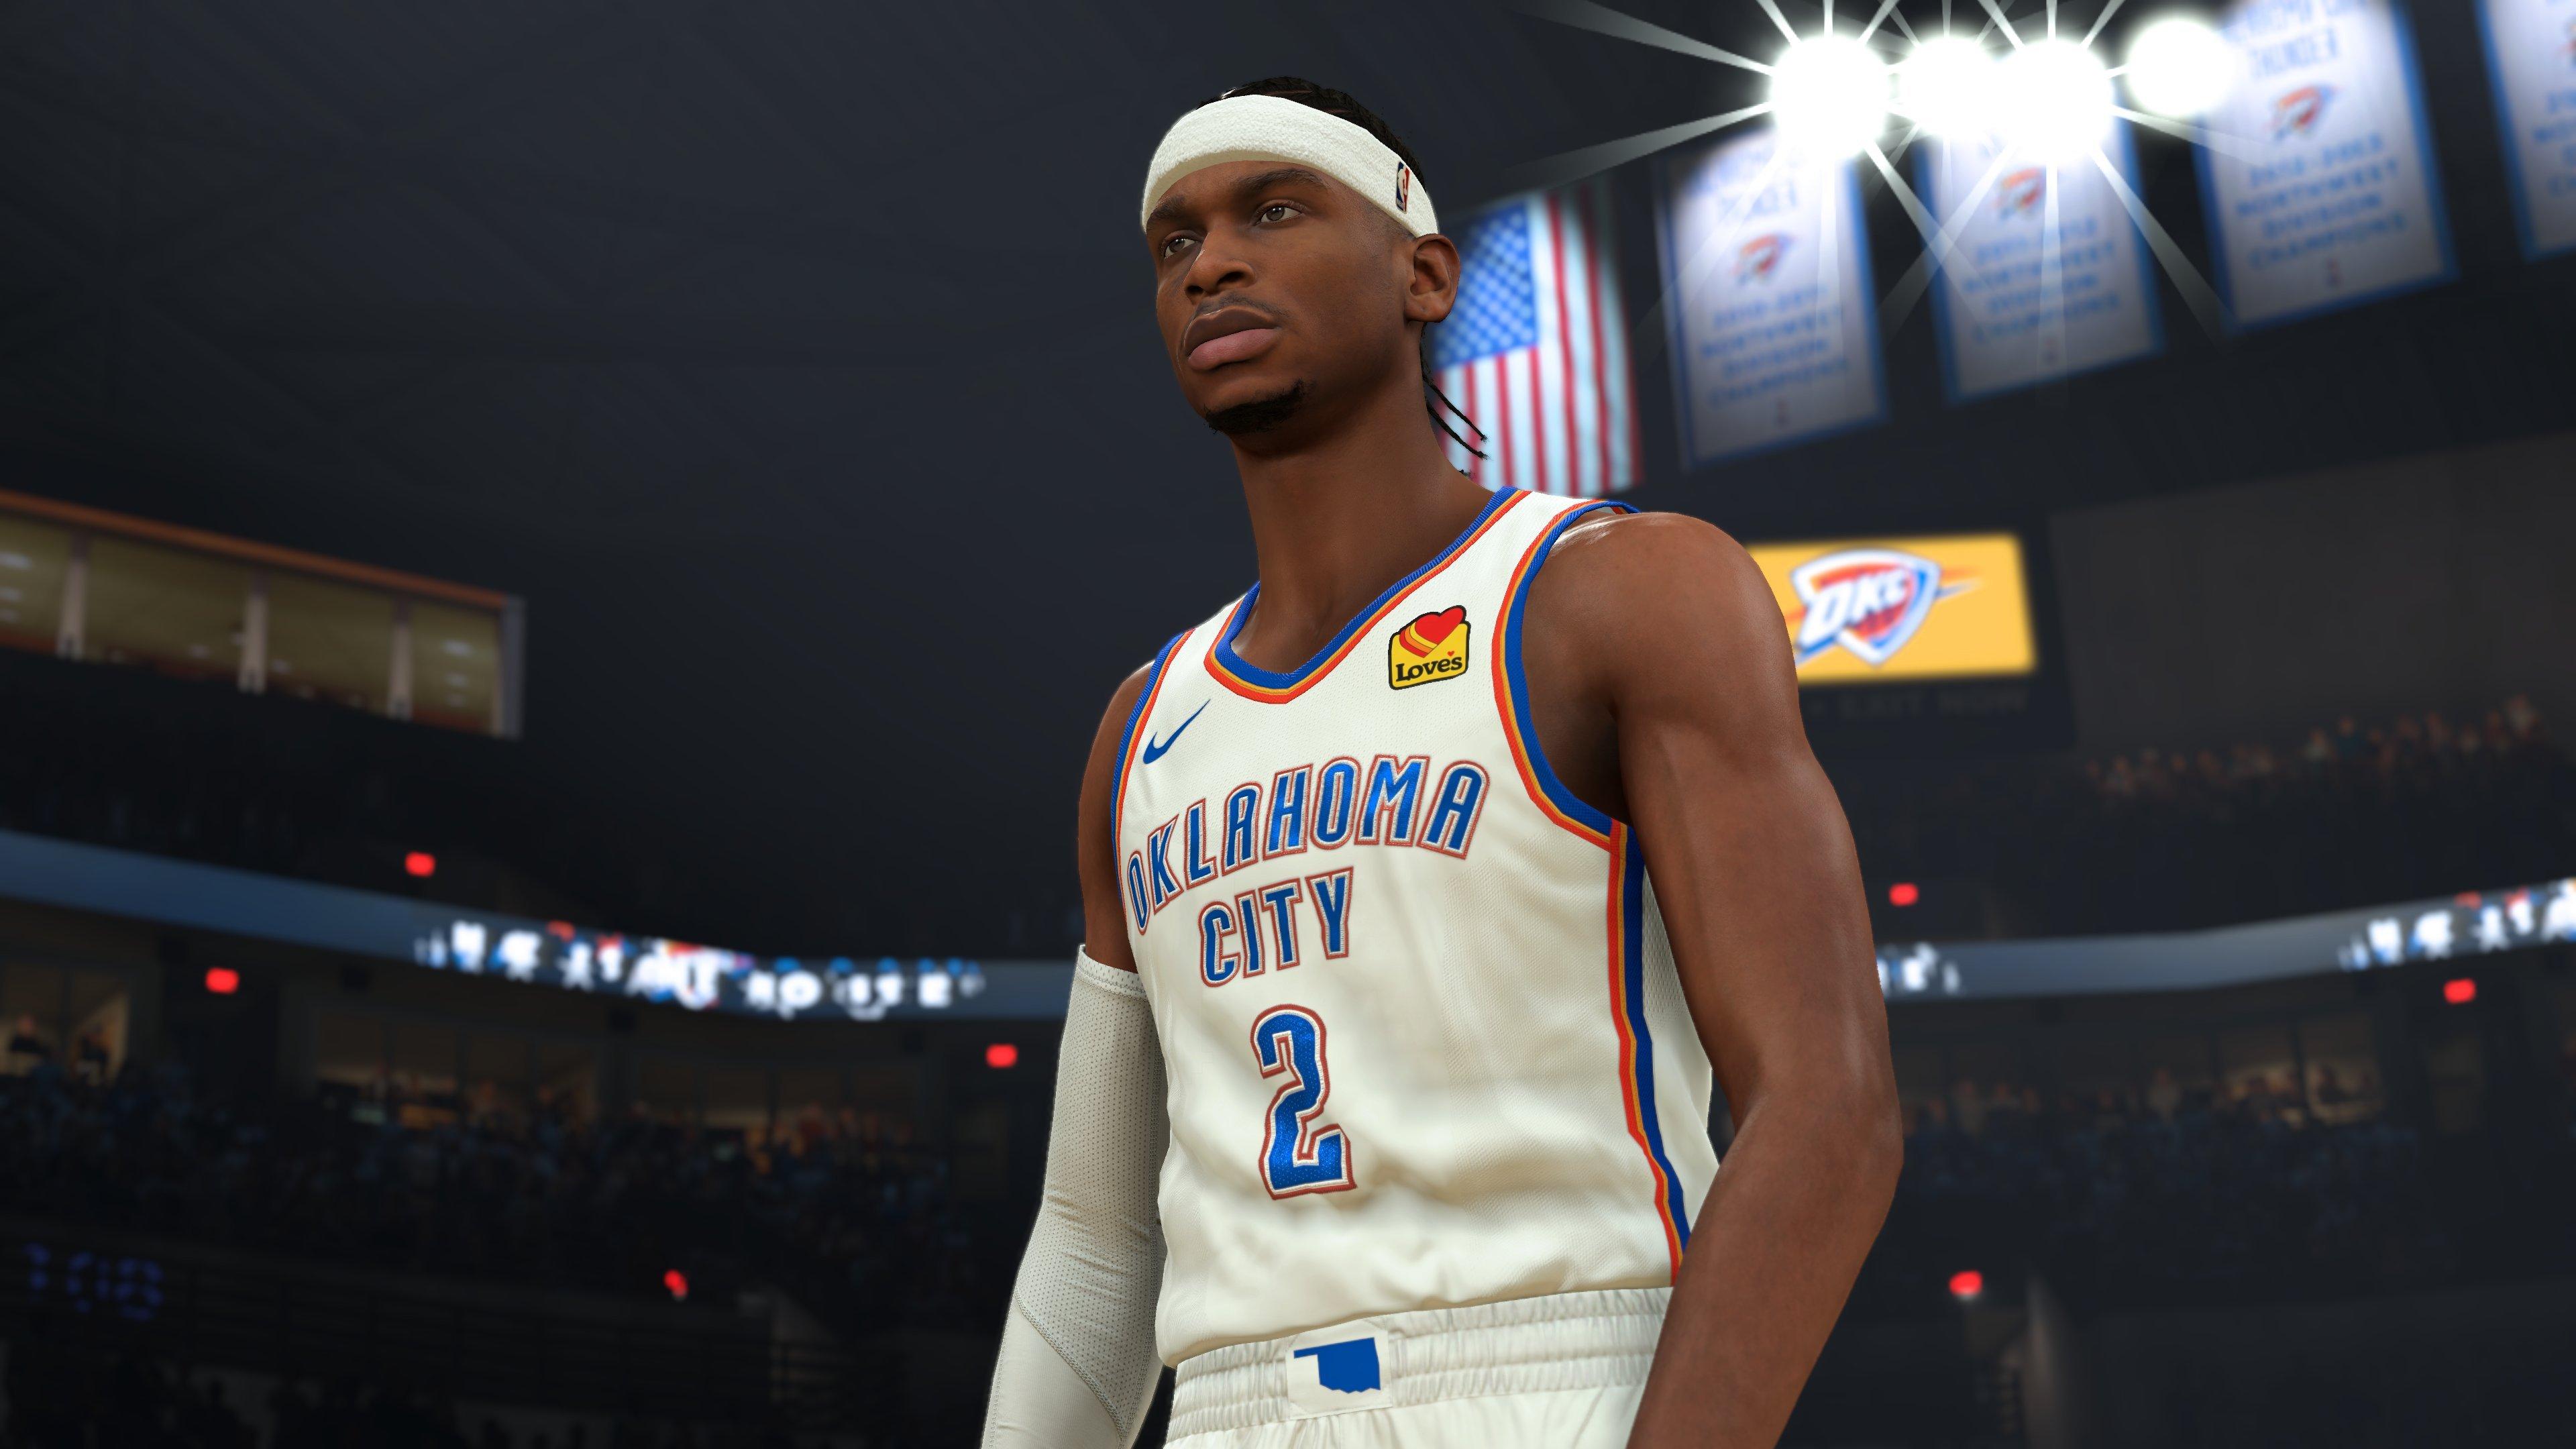 Buy NBA 2K24 Black Mamba Edition Steam